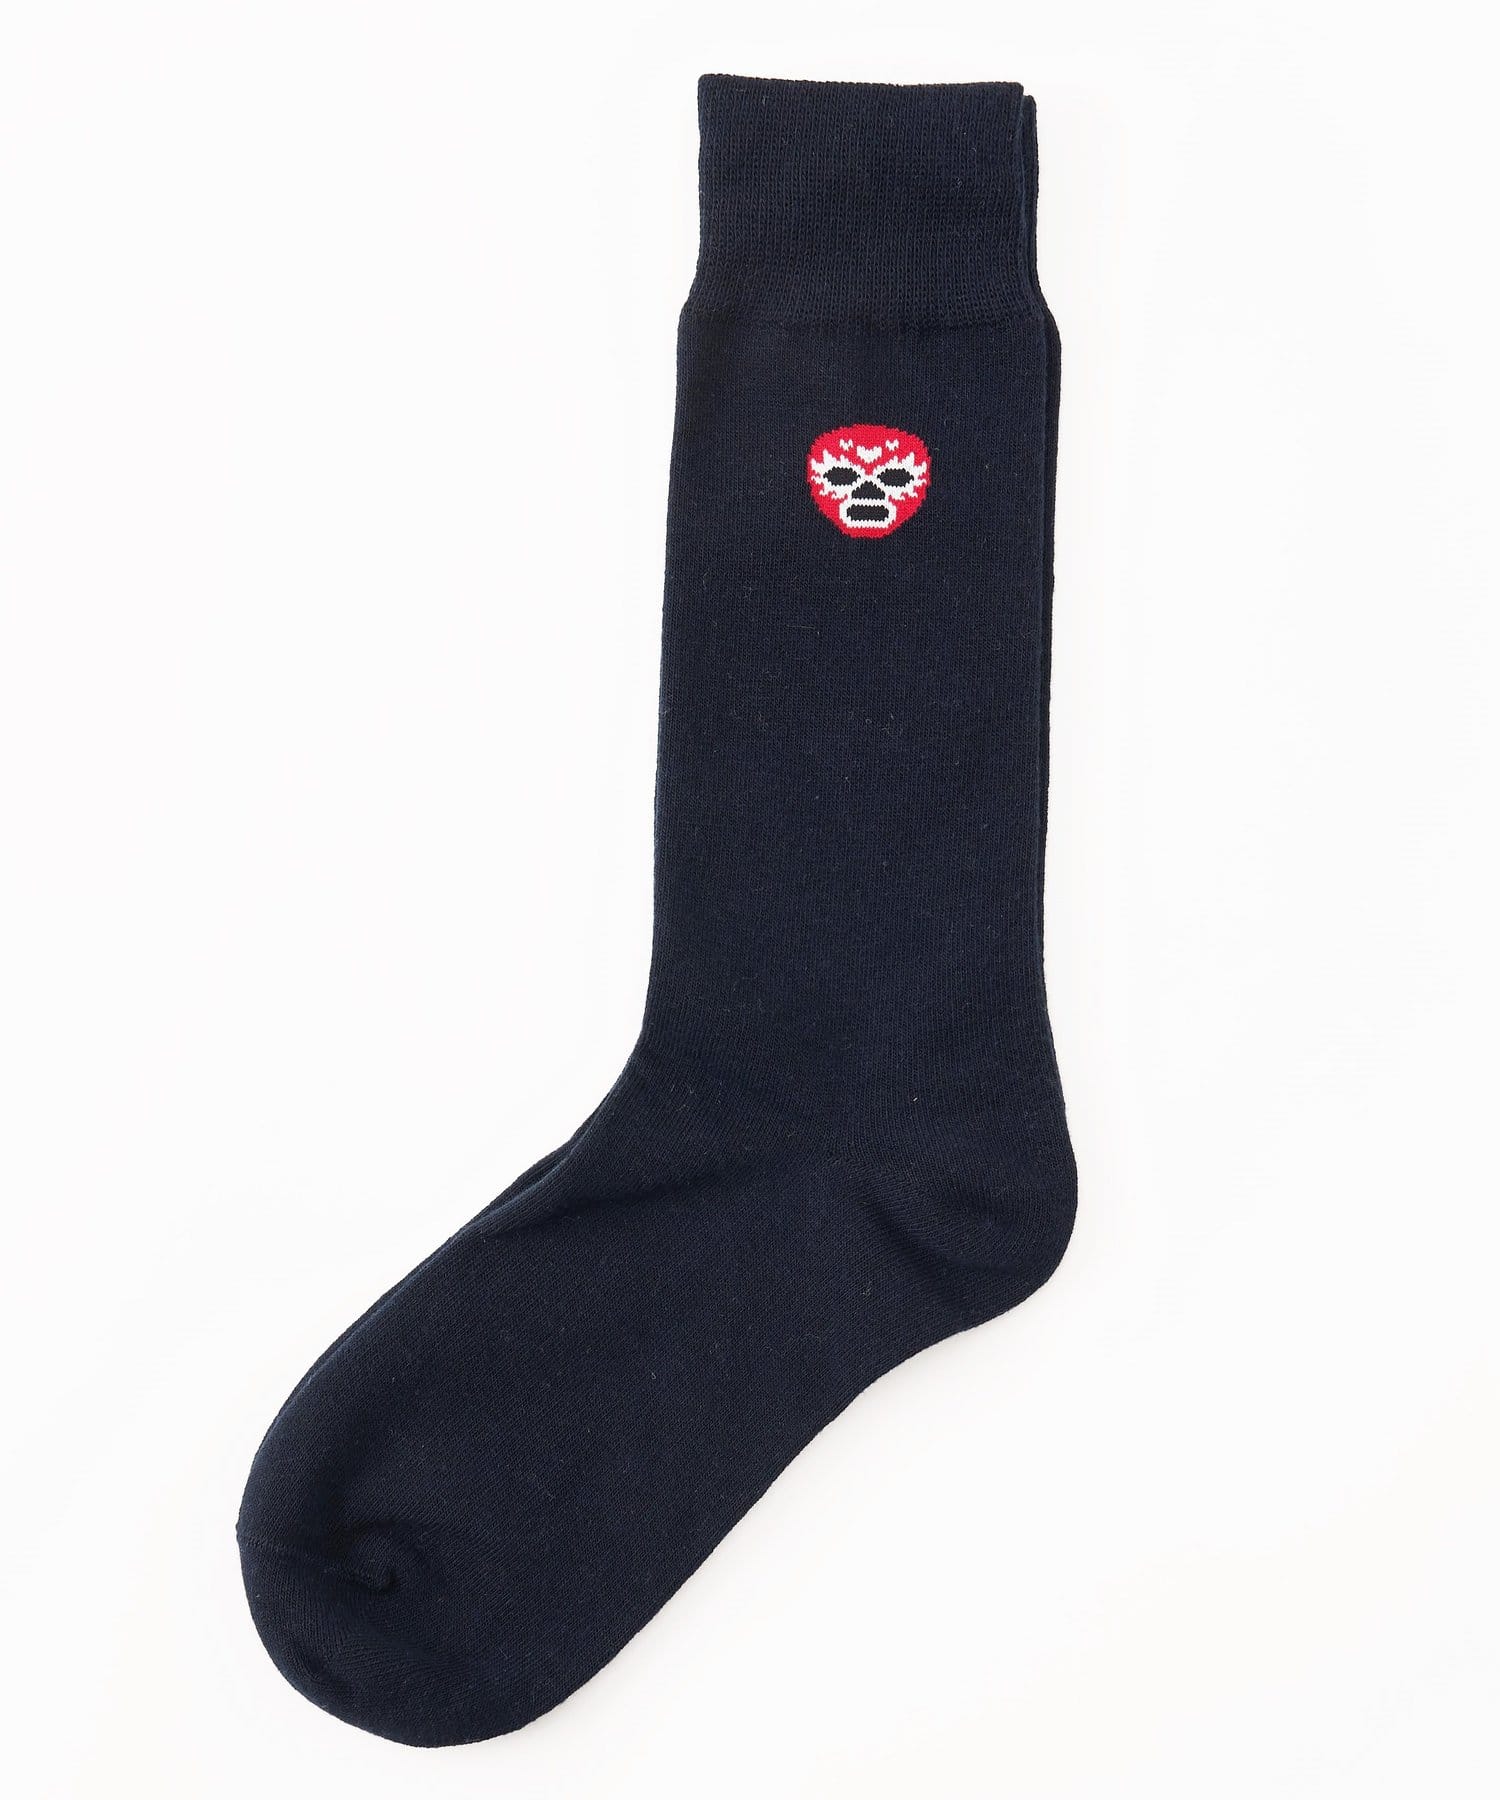 BIRTHDAY BAR(バースデイバー) ルチャ MENS Gift socks